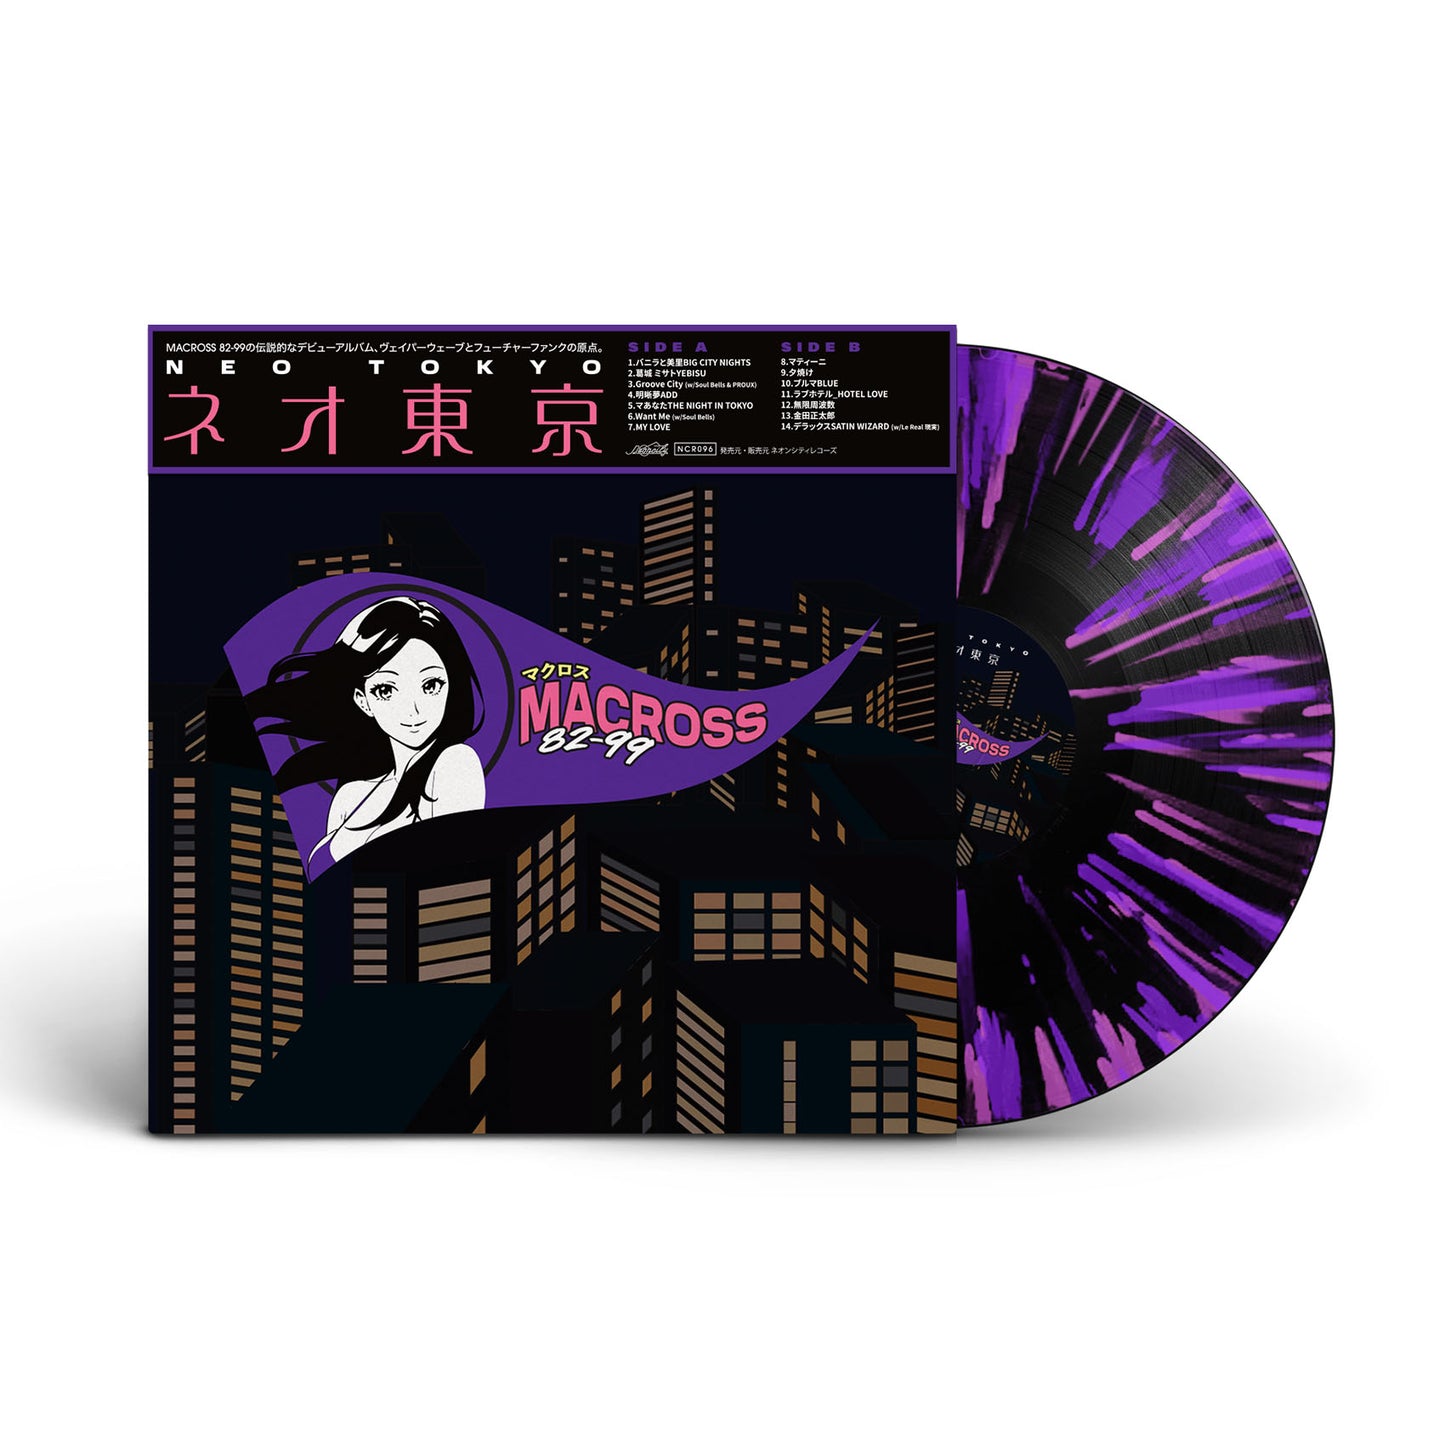 [Pre-order] Macross 82-99 - 'ネオ東京 (Neo Tokyo)' 12" Vinyl ("Midnight City" colorway) - Neoncity Records